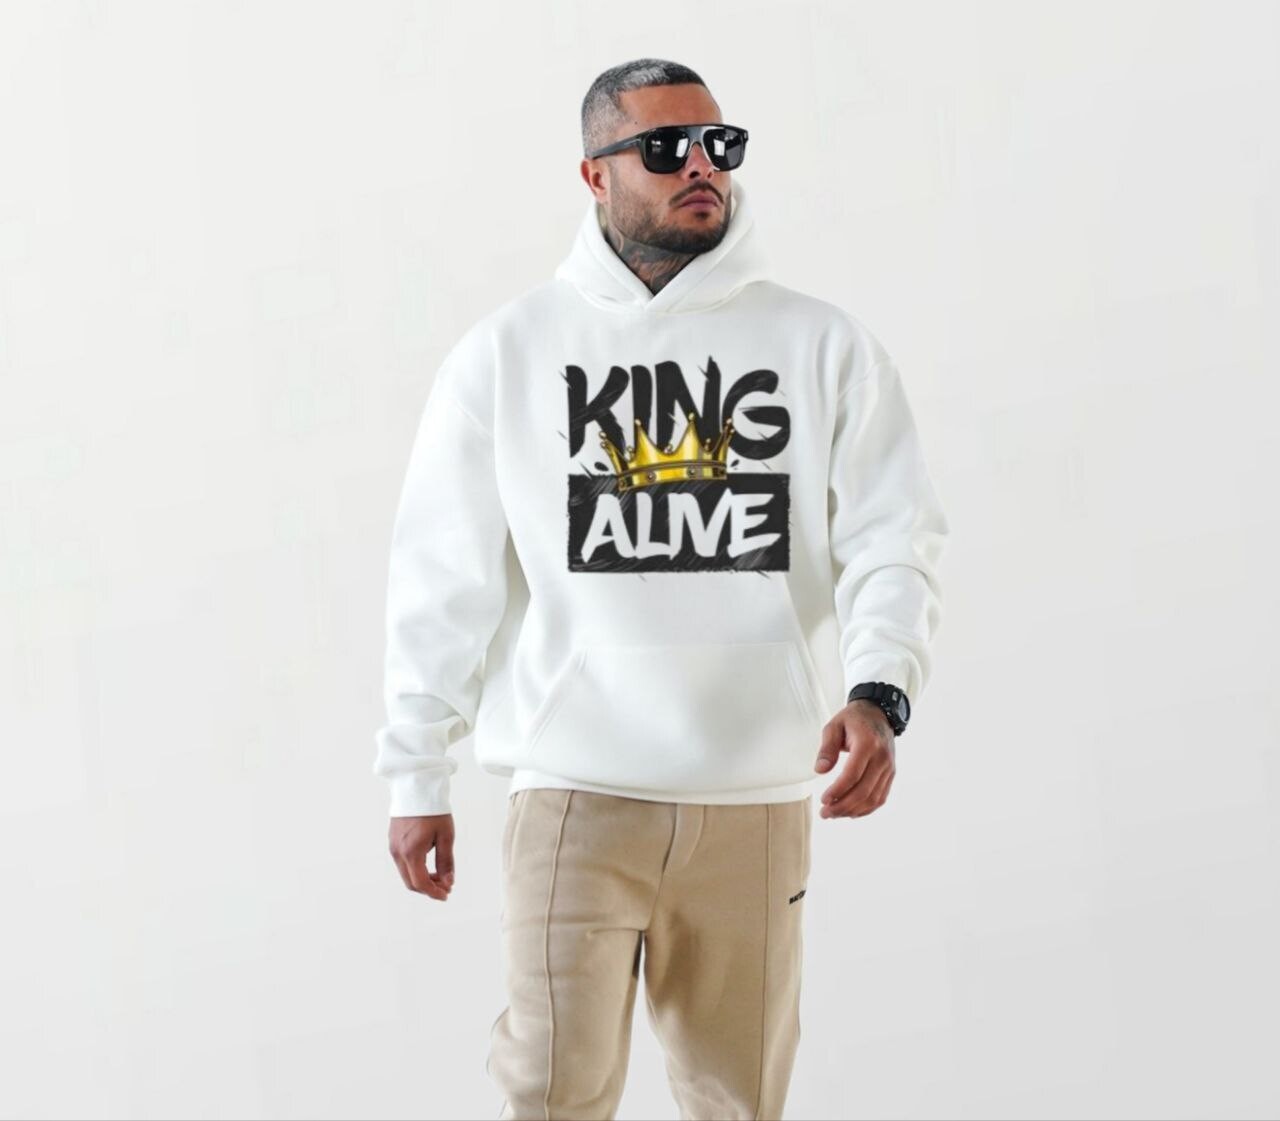 King alive_Elite Hoodie white